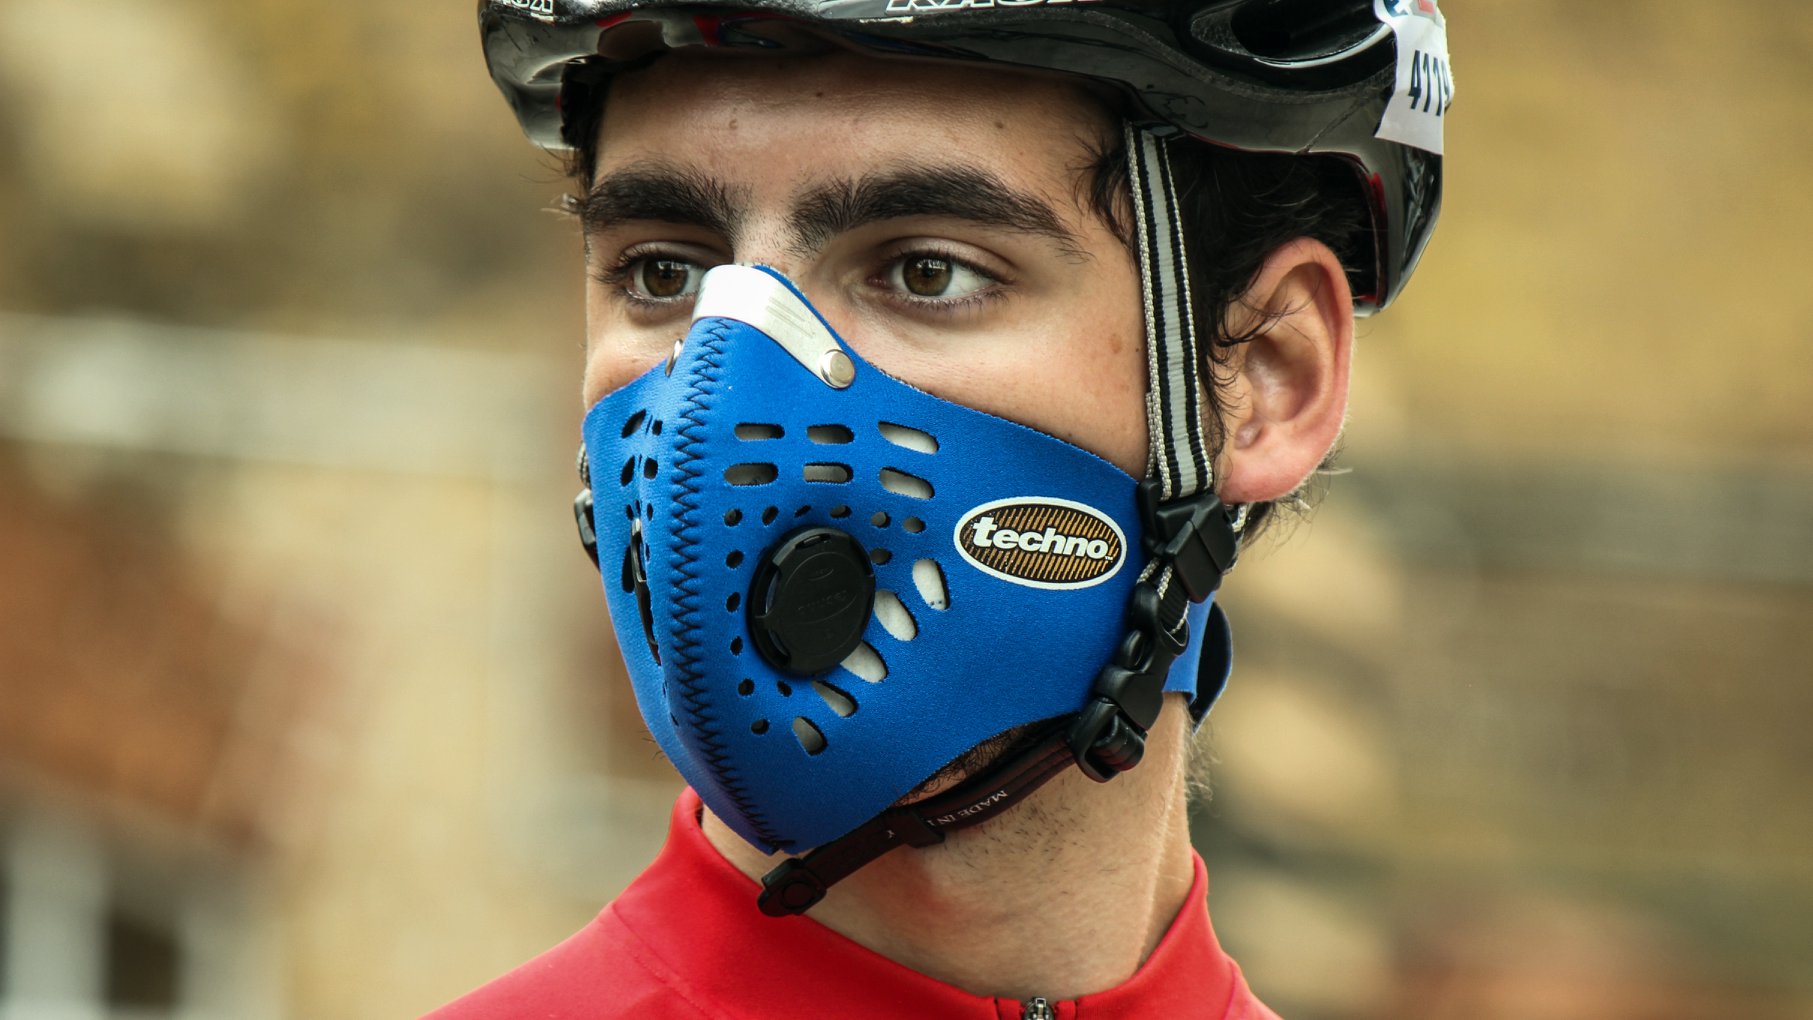 Masque Pollution Masque Anti Pollution Velo Vélo Masque Anti-Pollution Visage Masque Anti-Pollution Visage Masque pour la Pollution pour Femmes